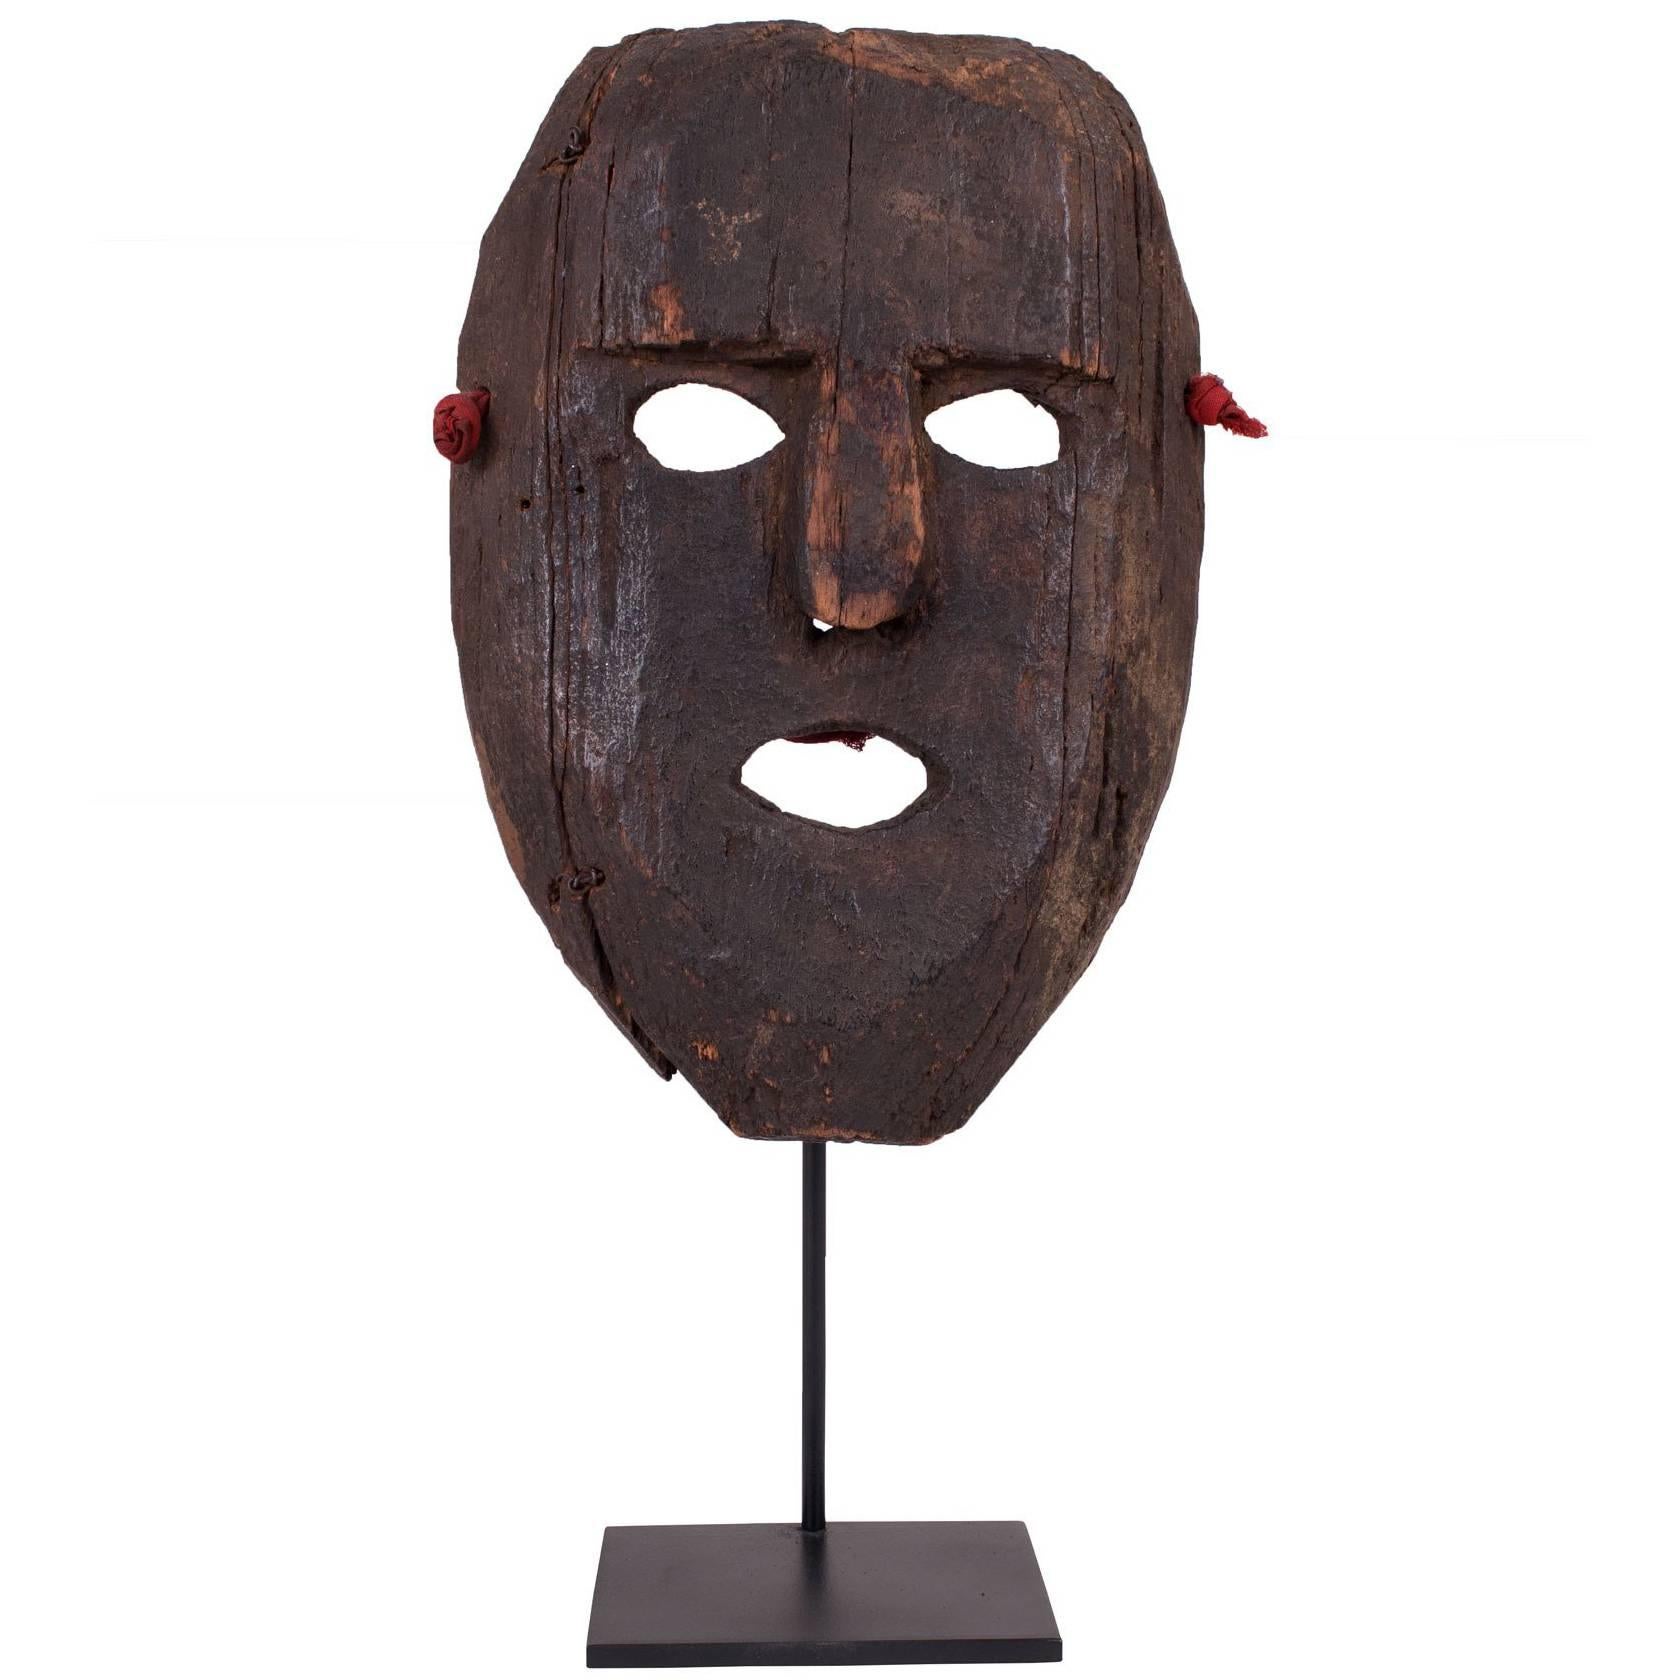 Himalayan Tribal Mask from Nepal